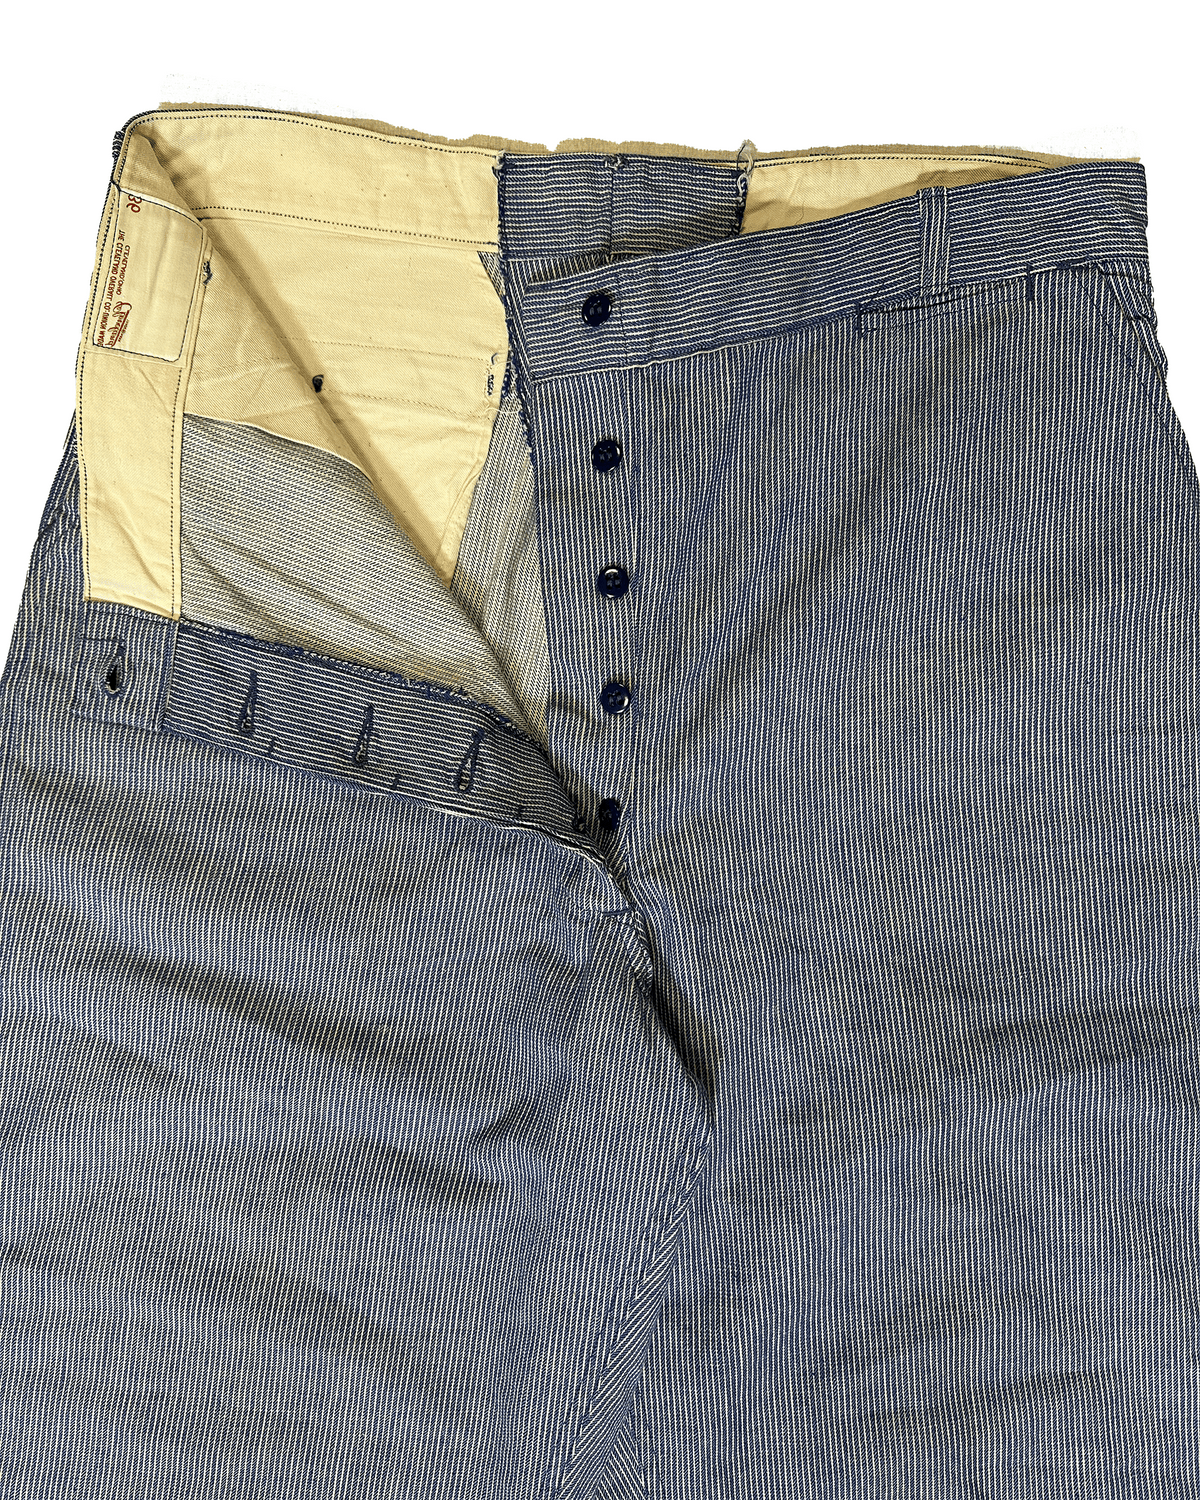 1930s Cotton Stripe Trousers Size 36